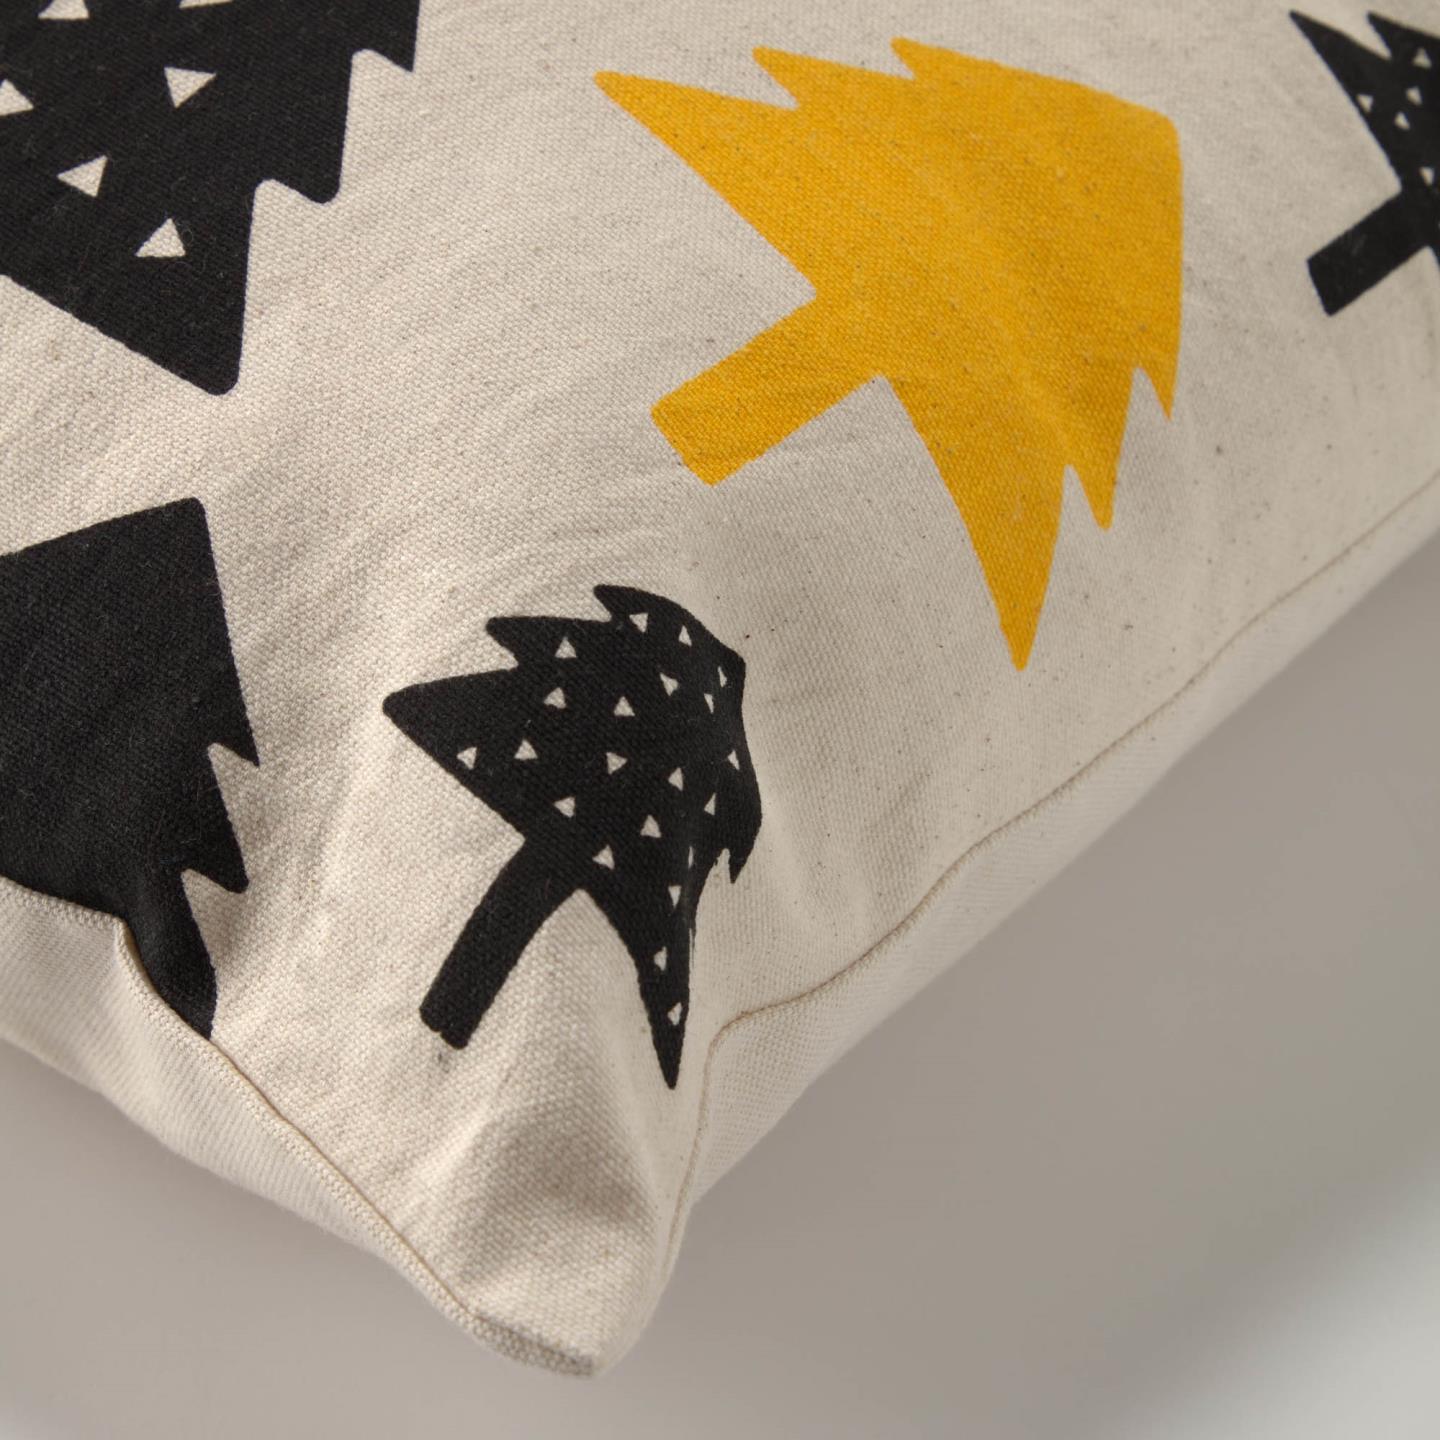 La Forma (ex Julia Grup) Чехло для подушки Saori 100% хлопок с маленькими деревьями 45 x 45 cm